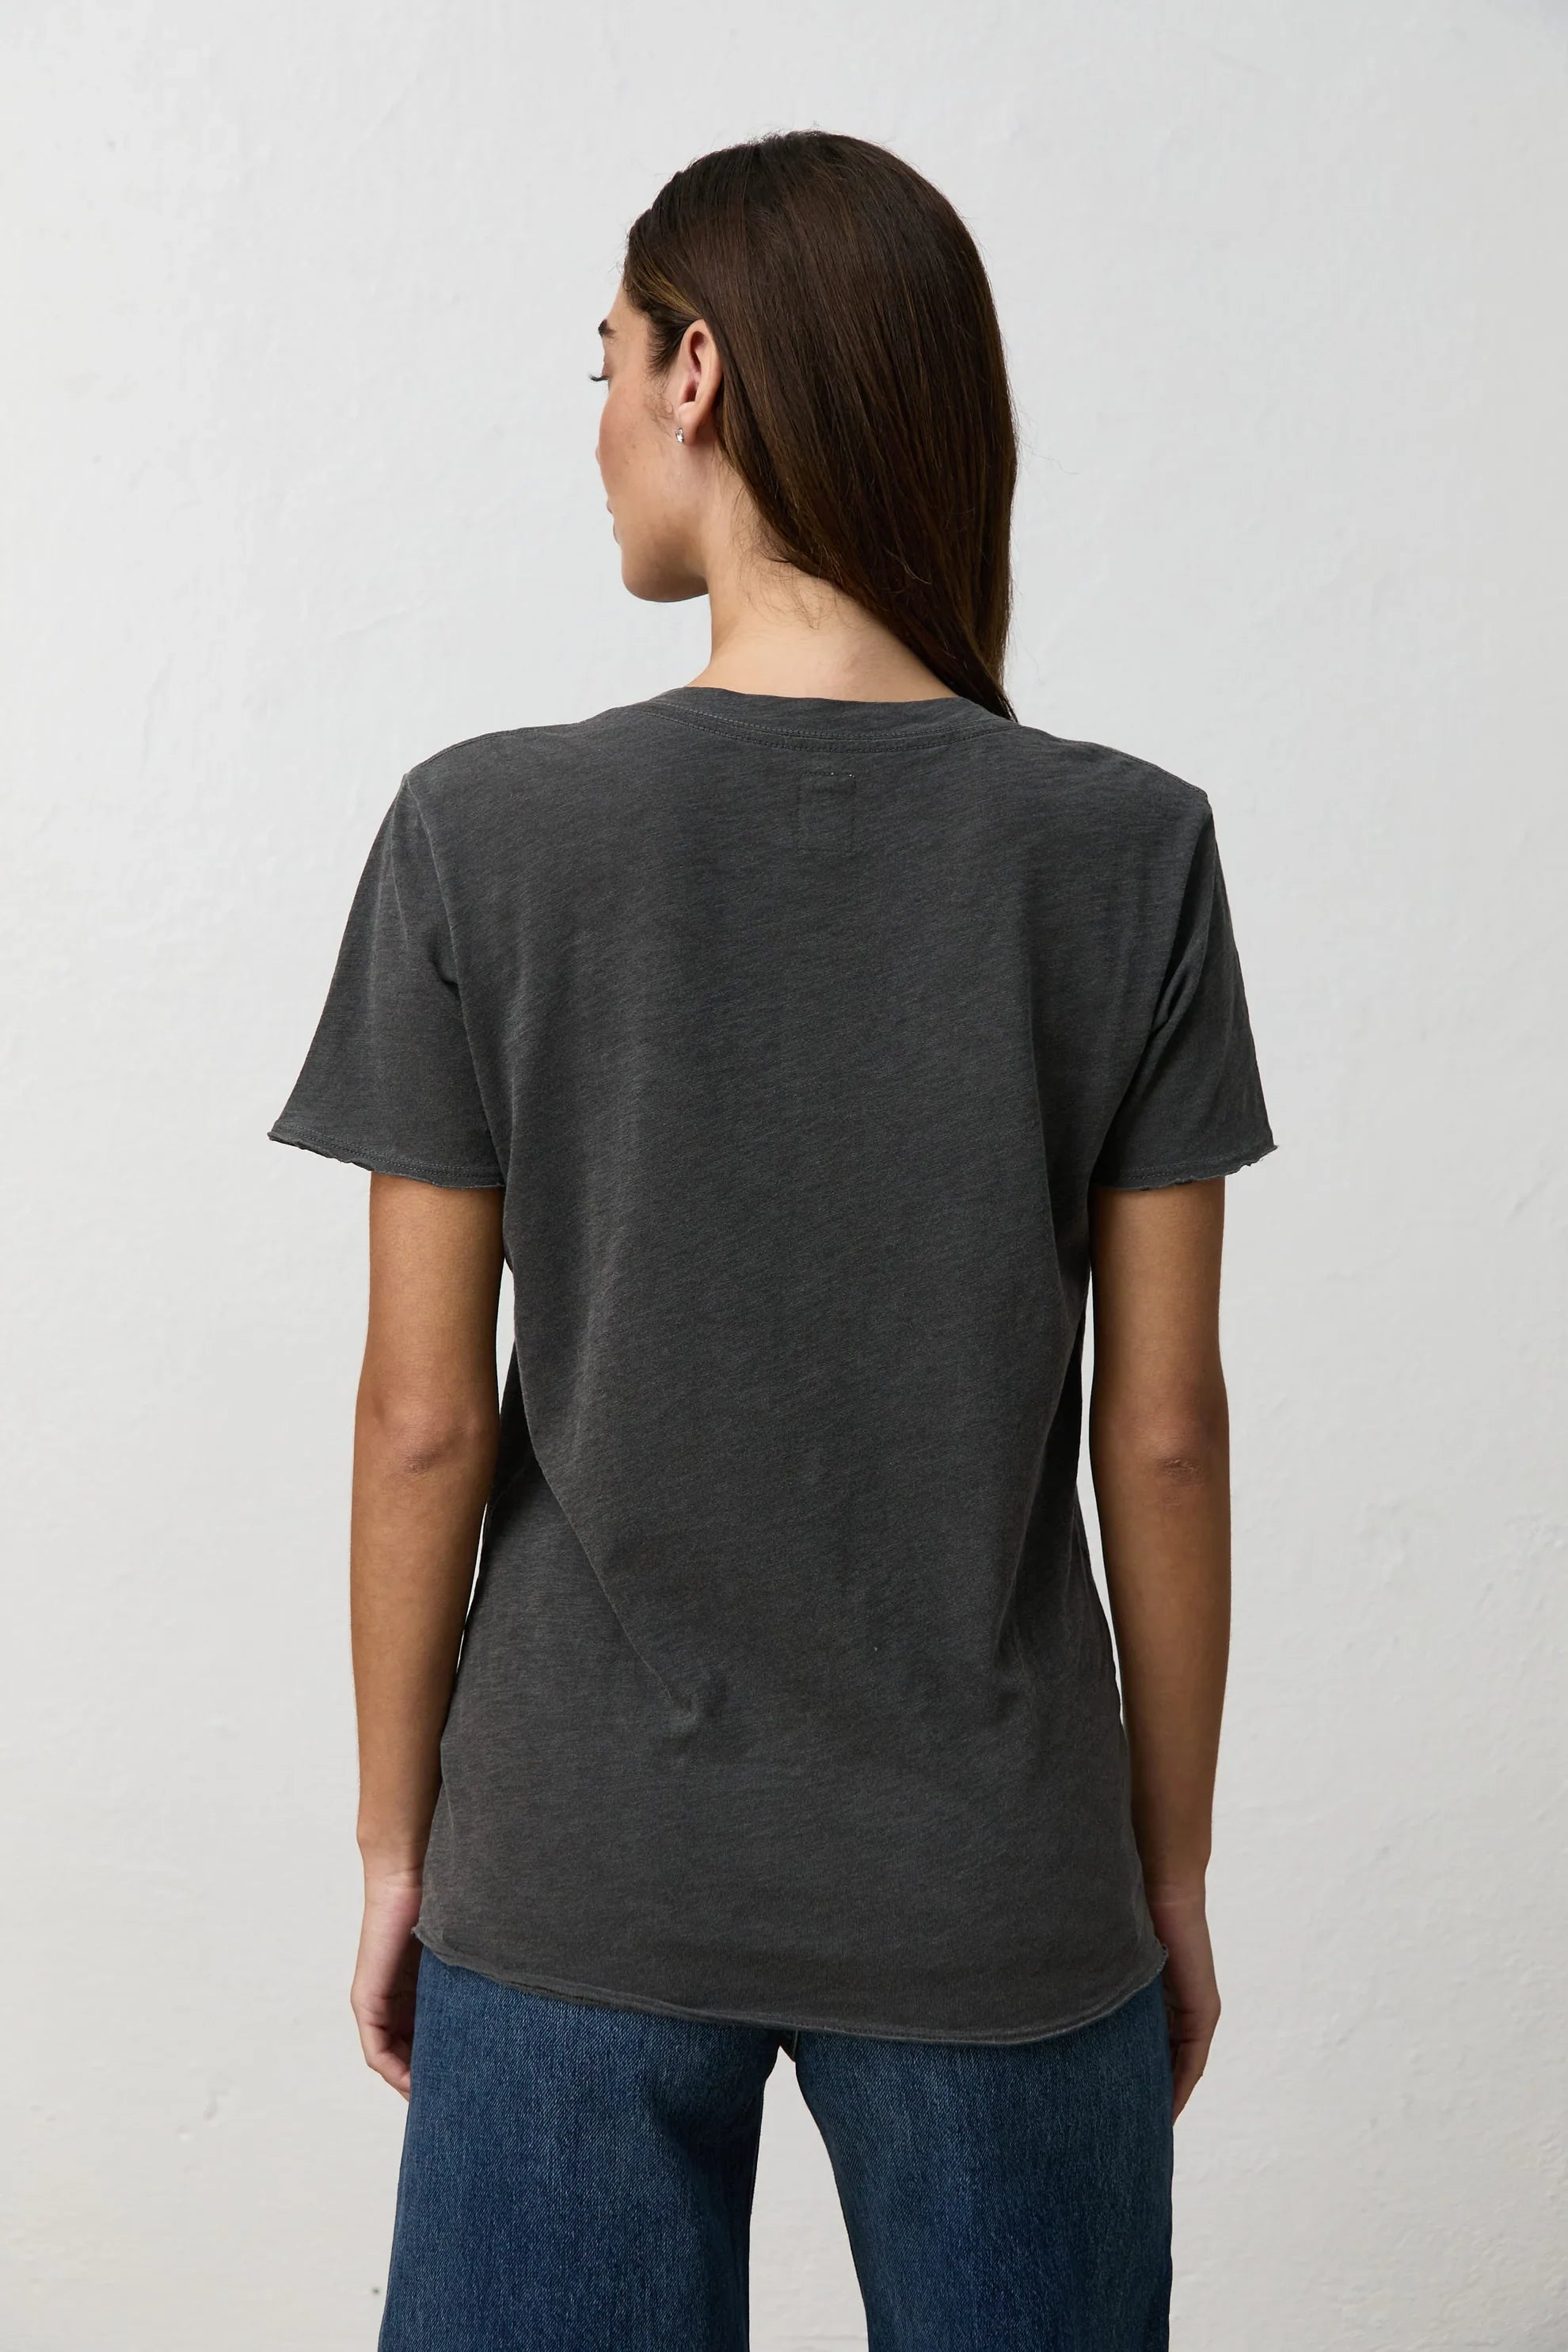 Cora V-Neck Tee T-Shirts NSF Clothing   